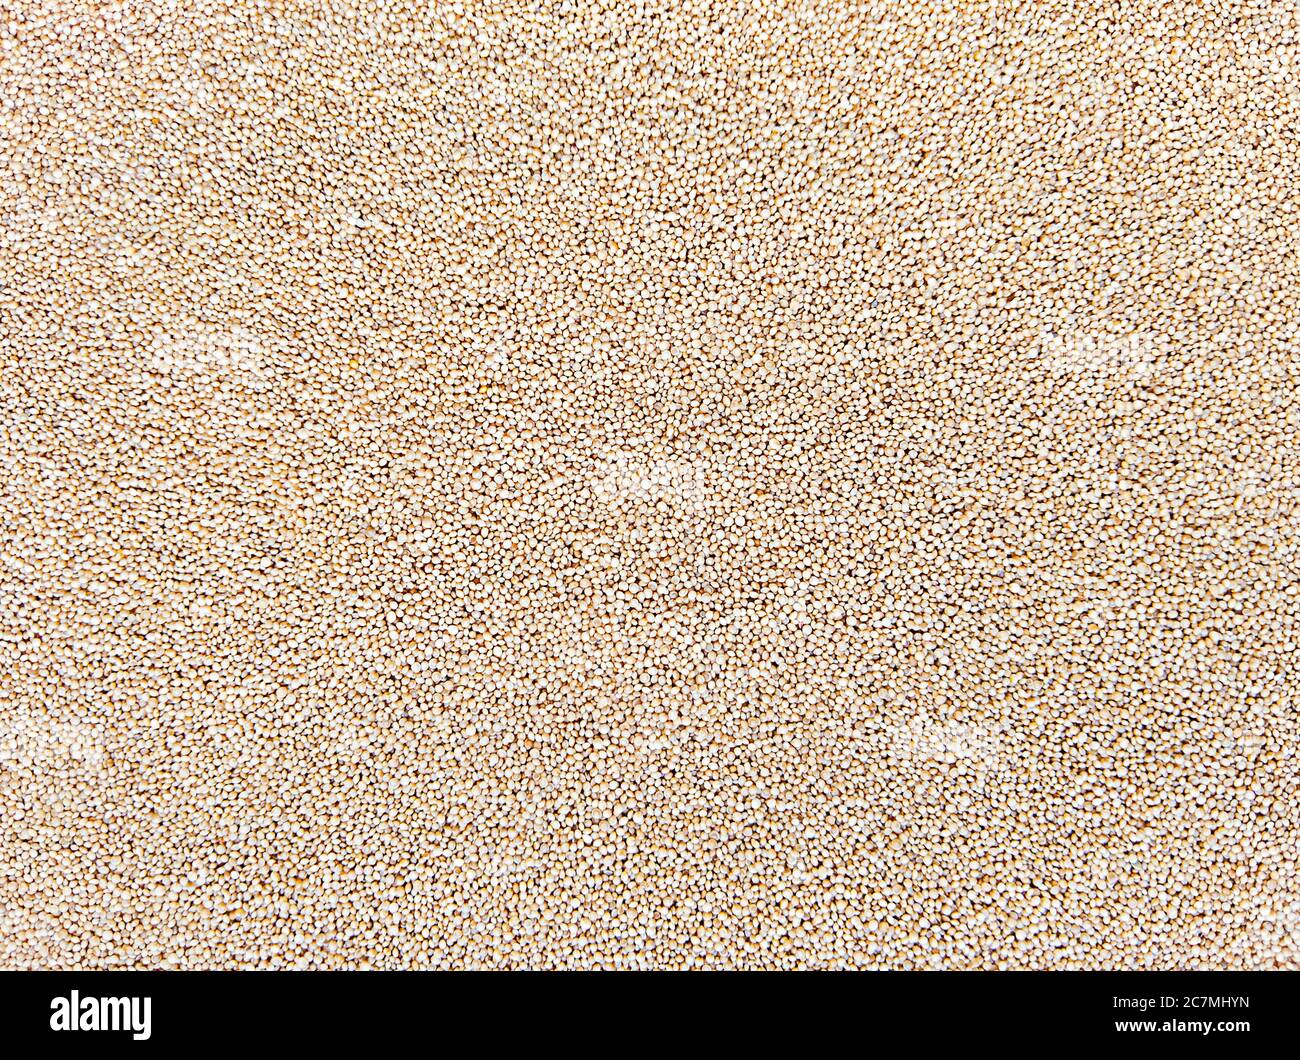 Amaranth seeds food textured background. Stock photo. Stock Photo